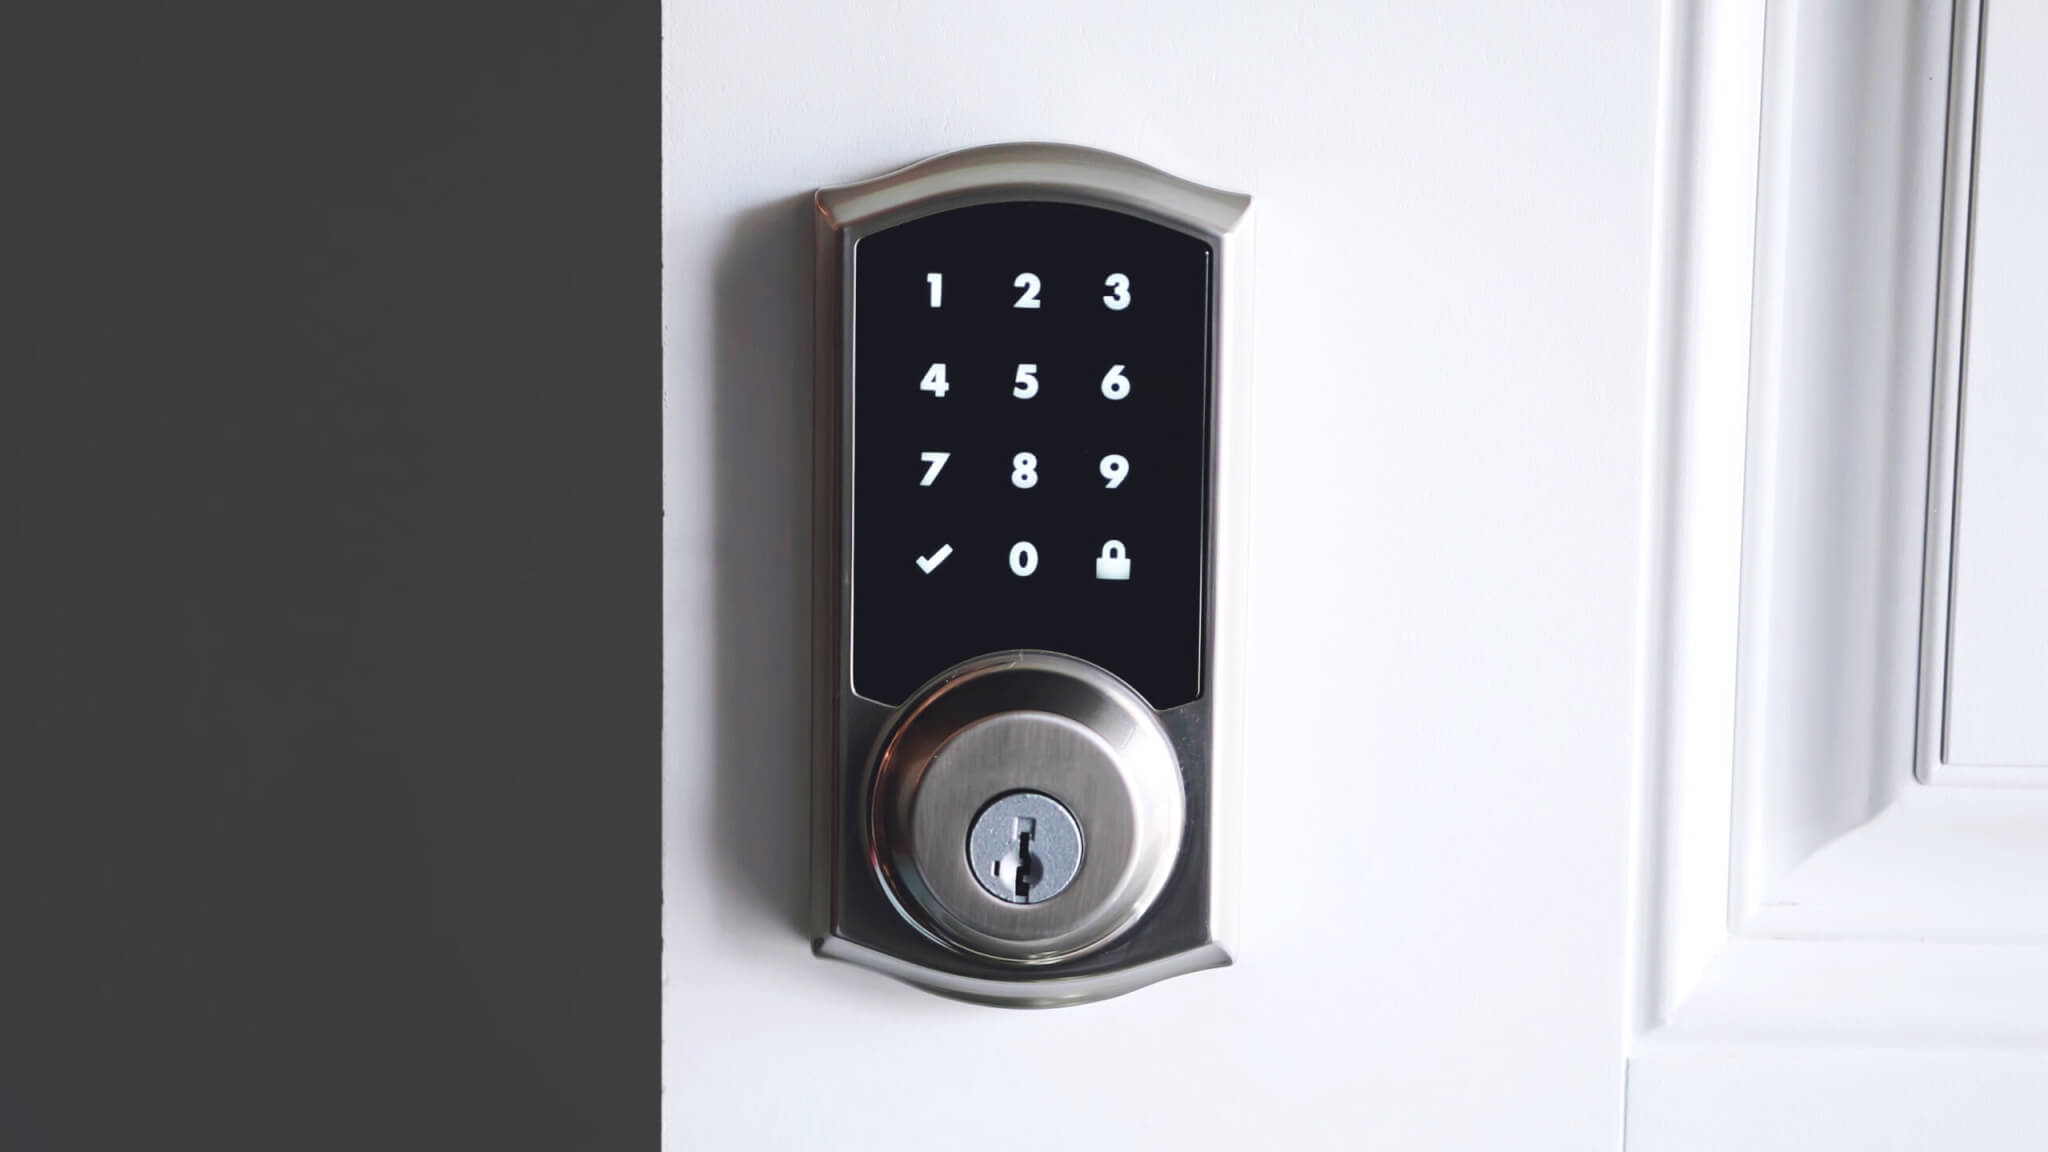 https://studyfinds.org/wp-content/uploads/2023/02/Smart-lock-on-a-door-scaled.jpg